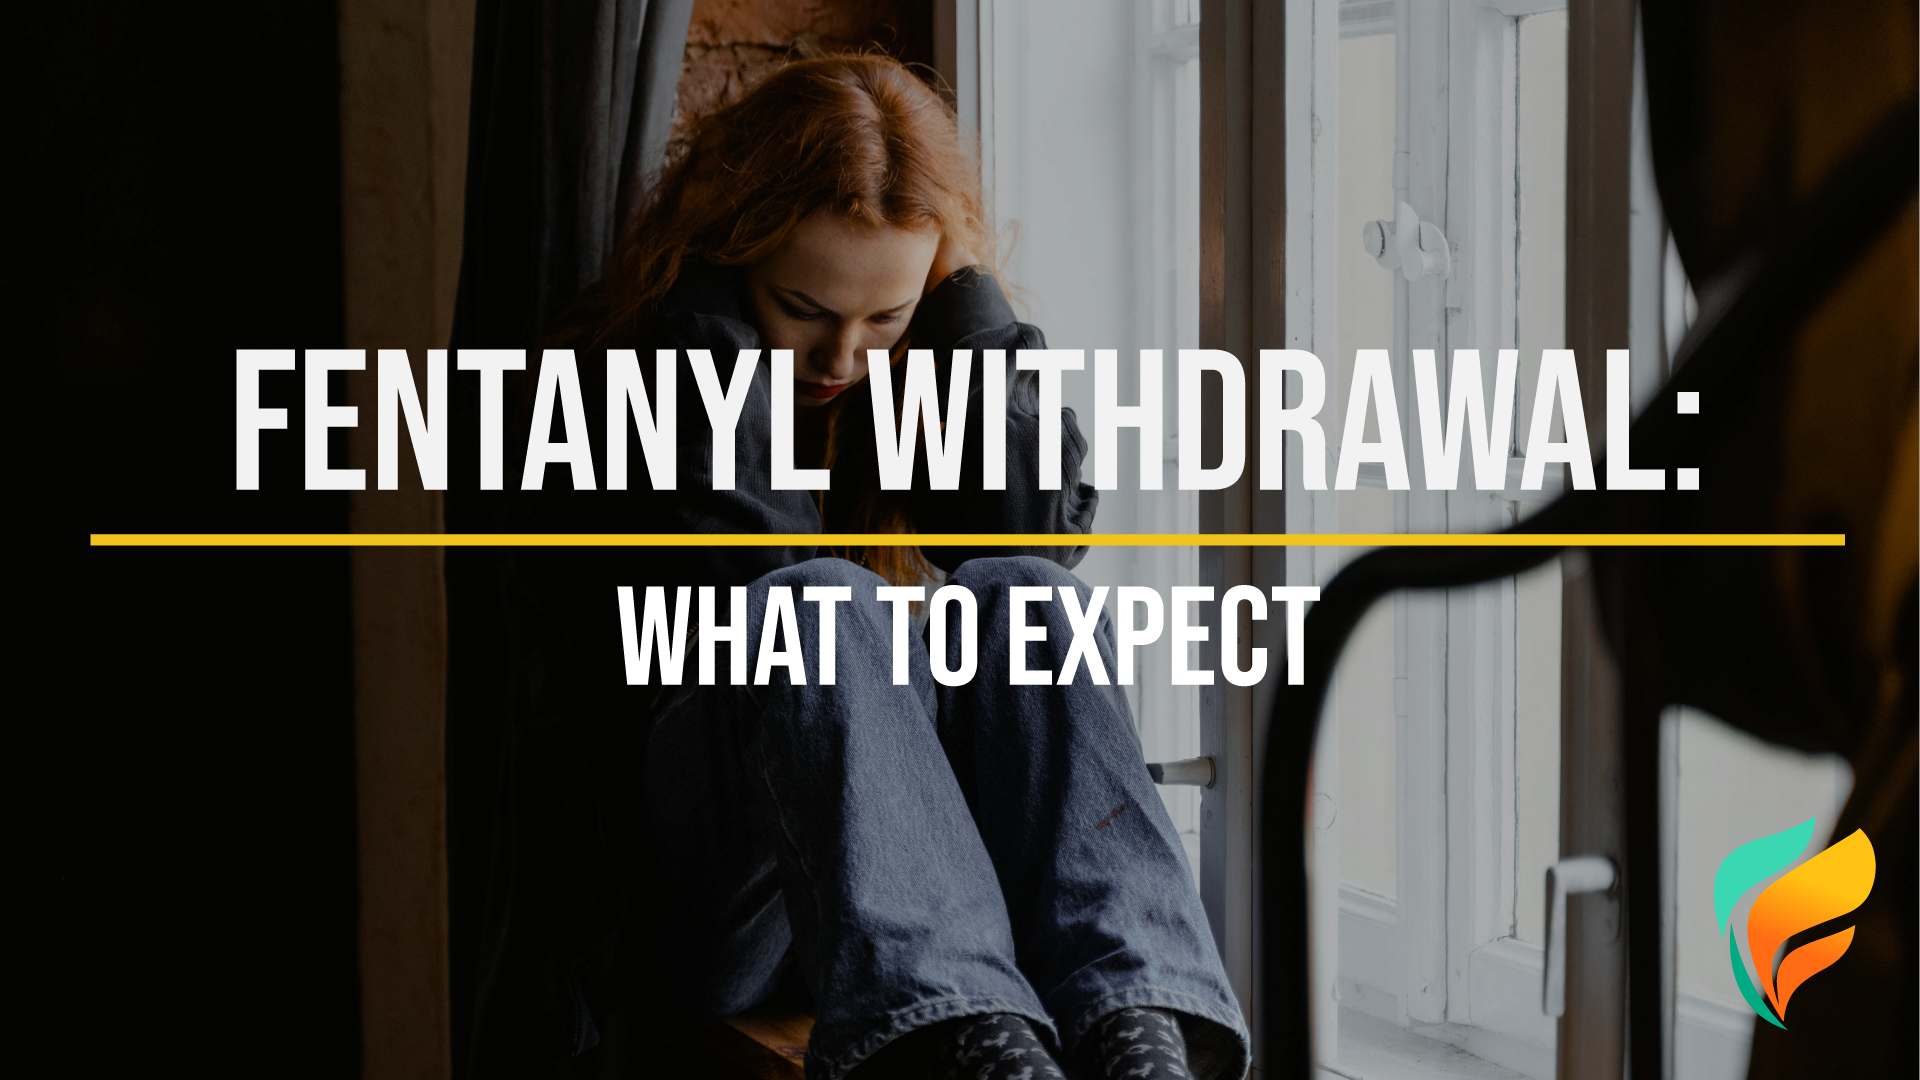 Fentanyl withdrawal